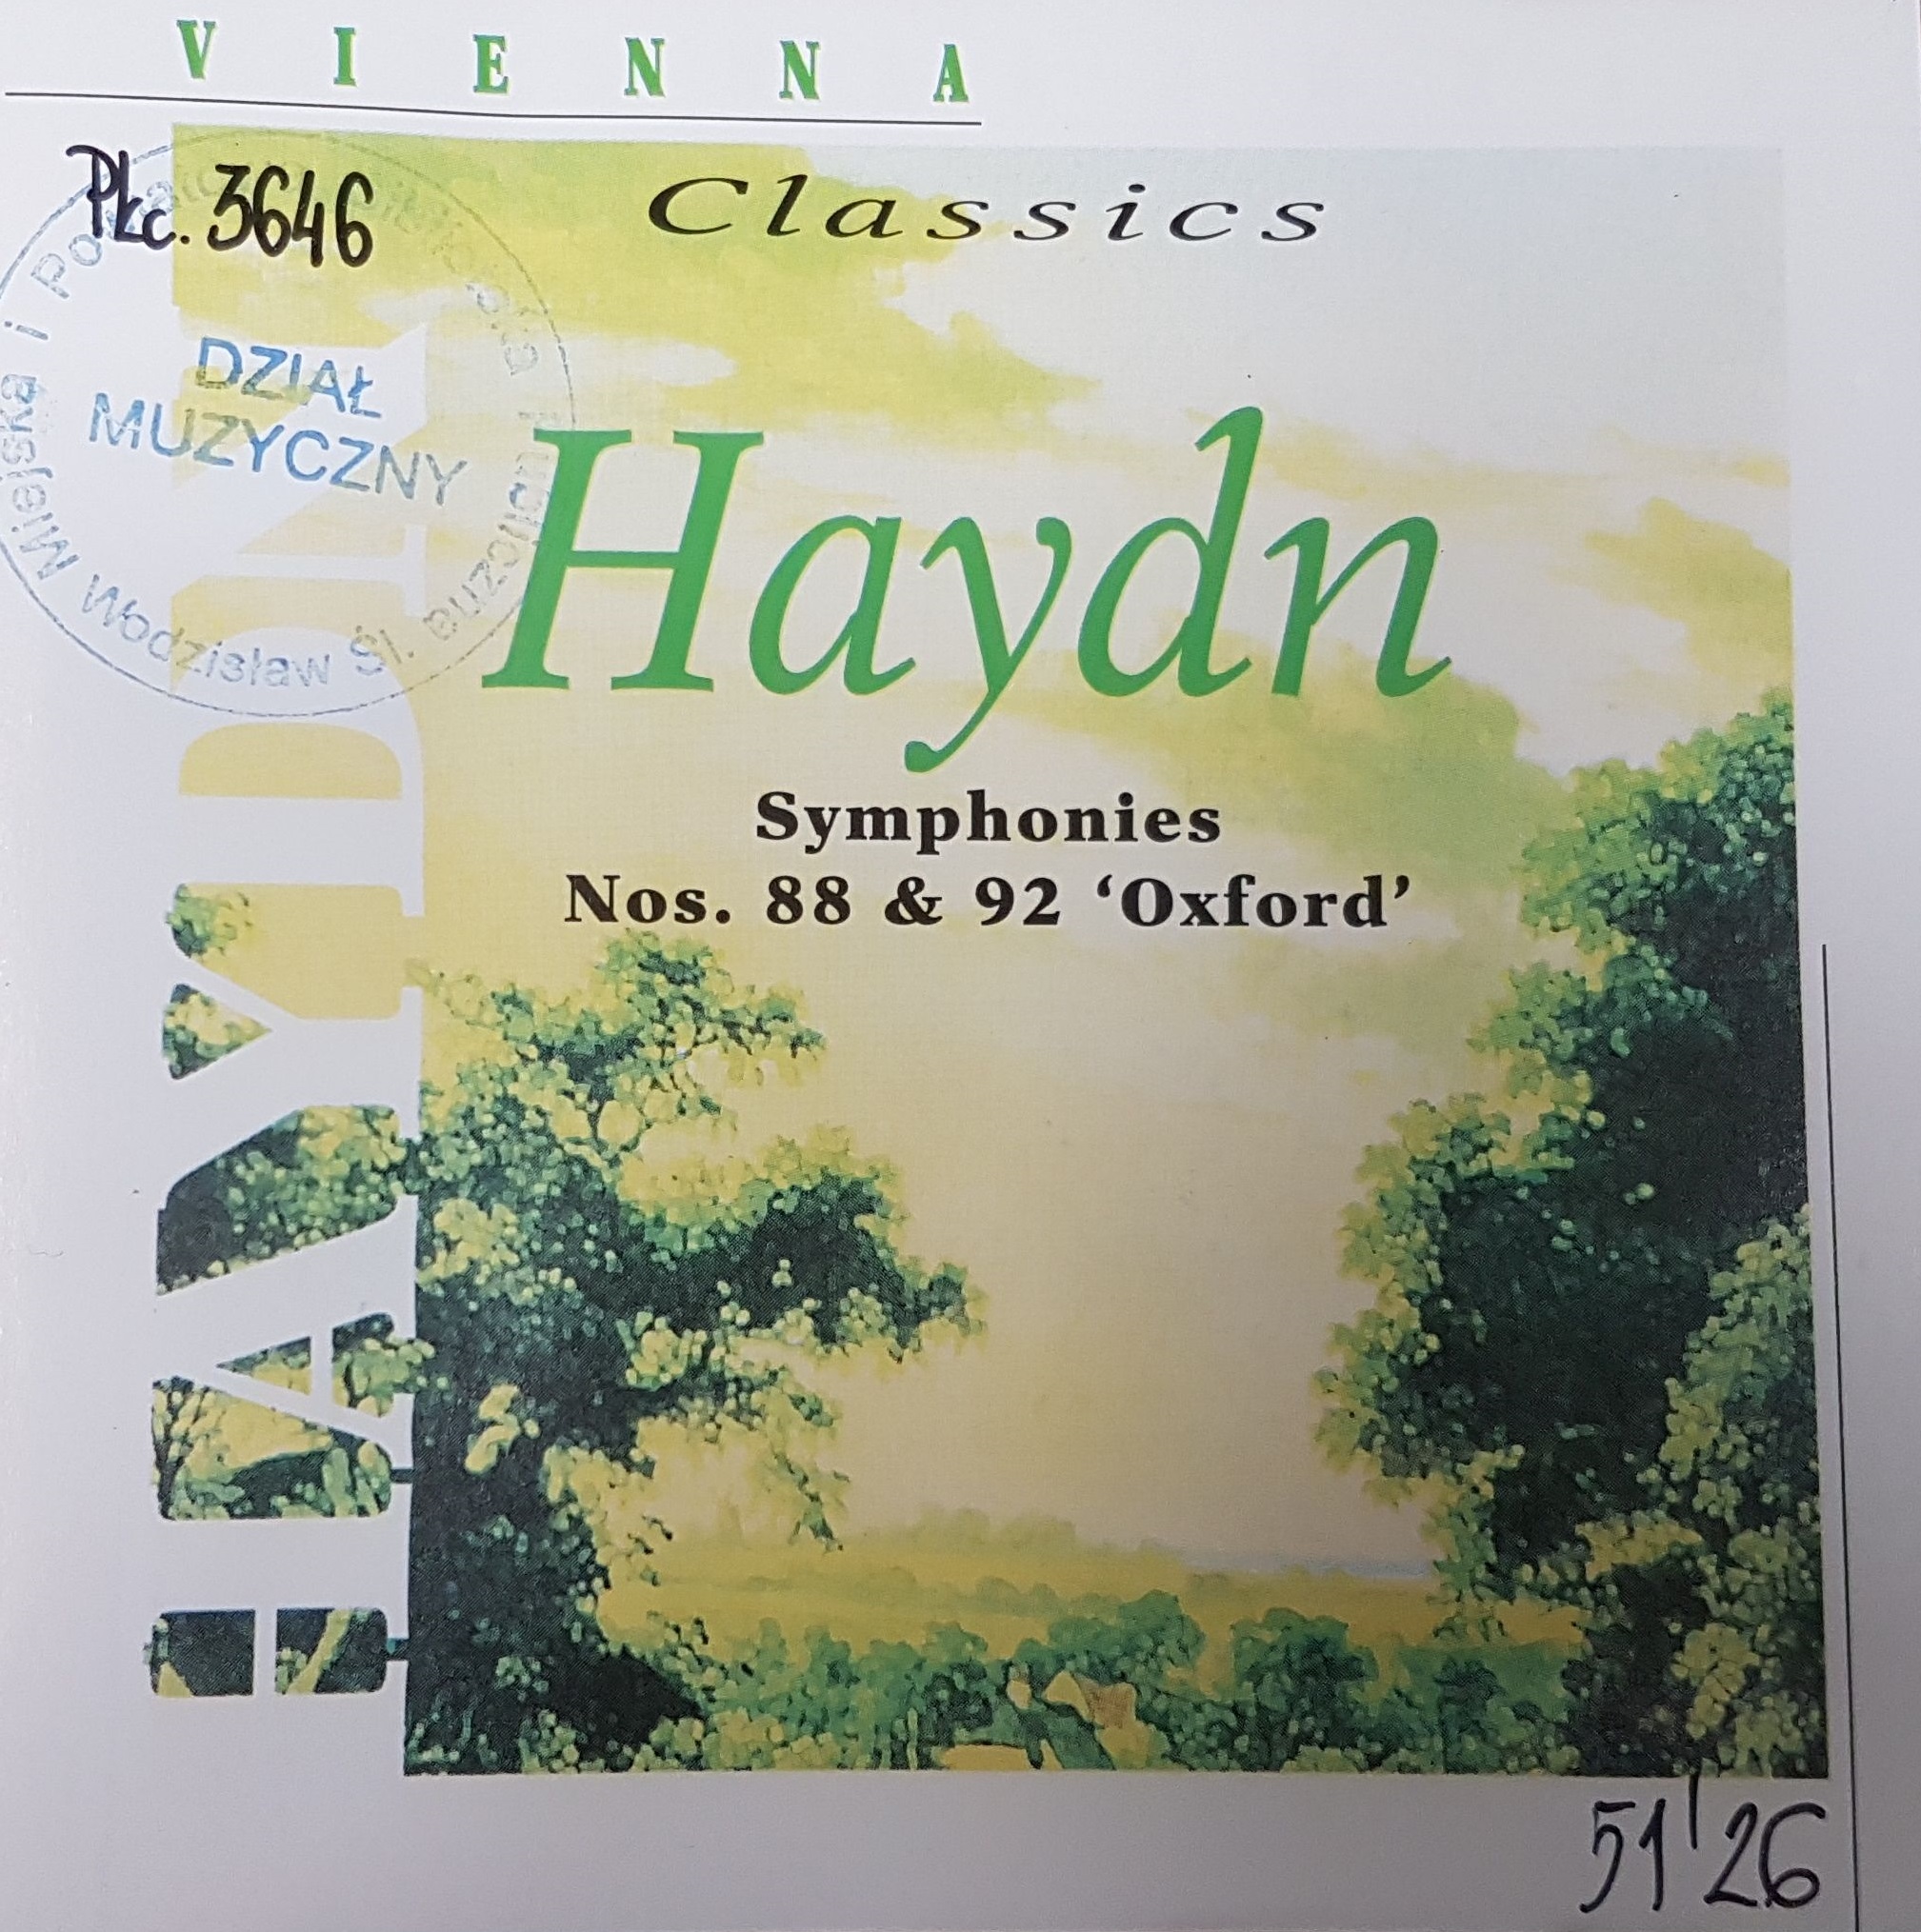 HAYDN JOSEPH – Symphonies Nos. 88 & 92 ‘Oxford’